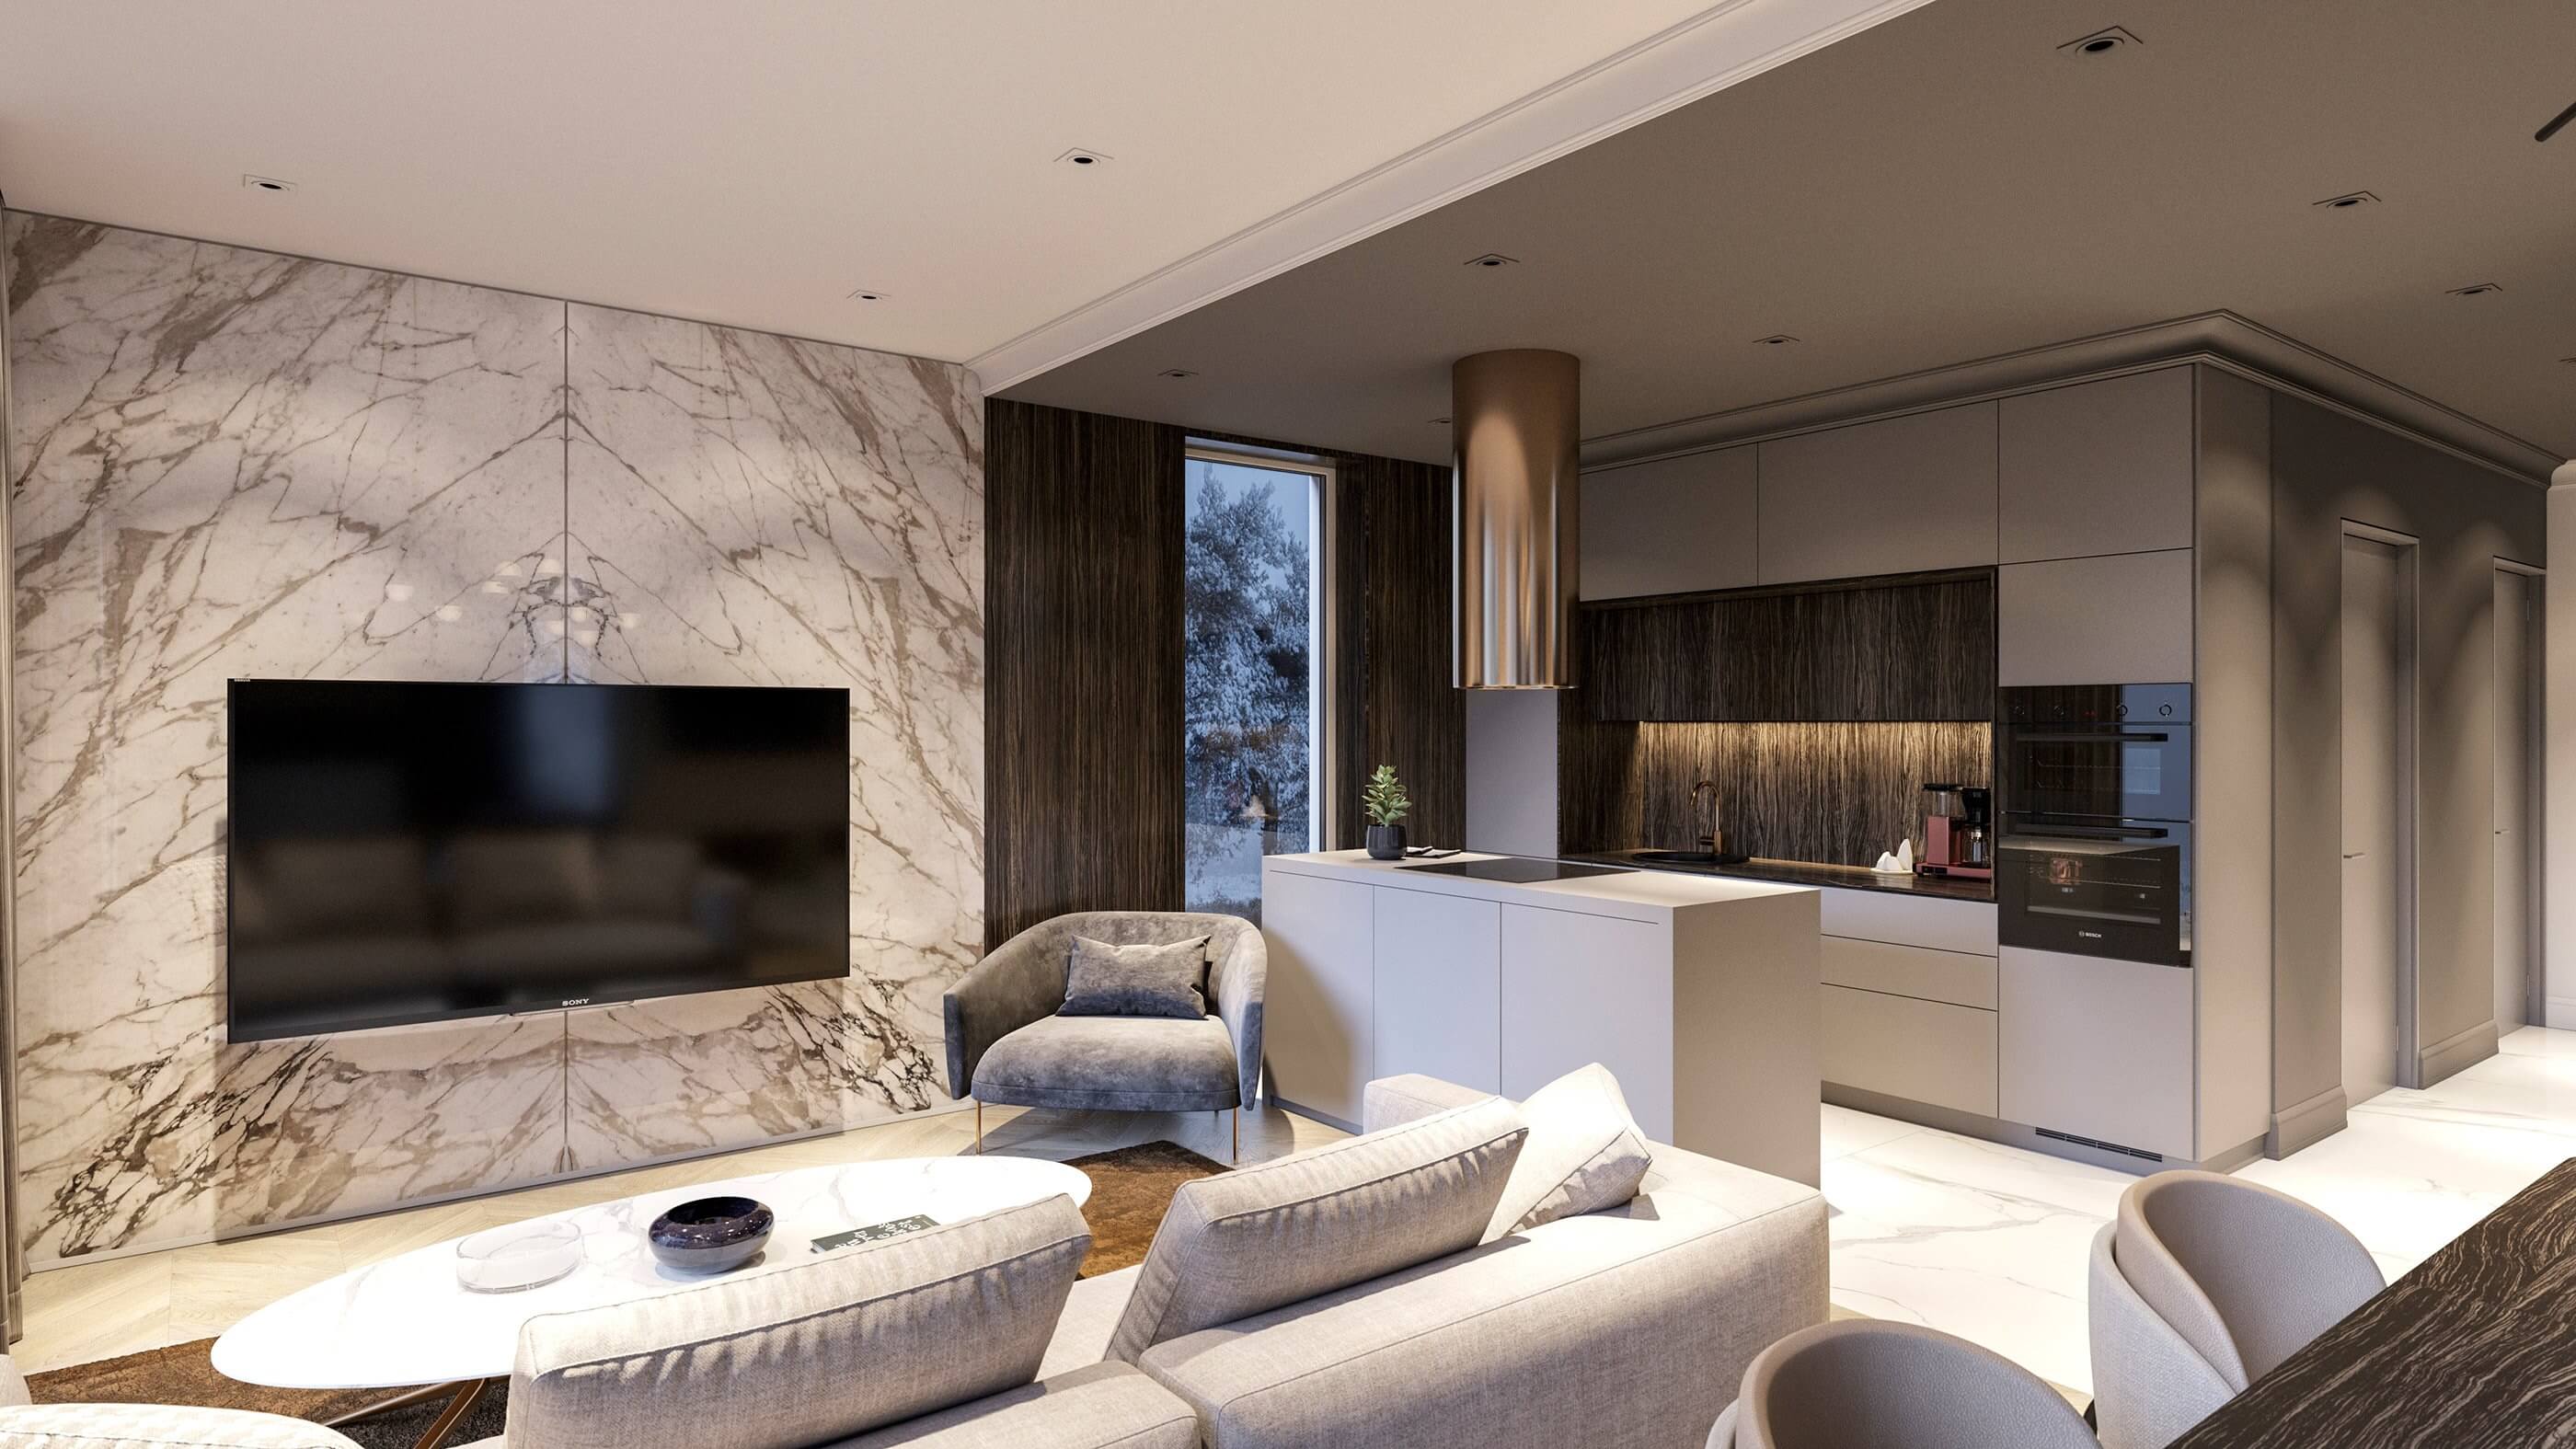 Stylish interior concept design kitchen and living room lights - cgi visualization